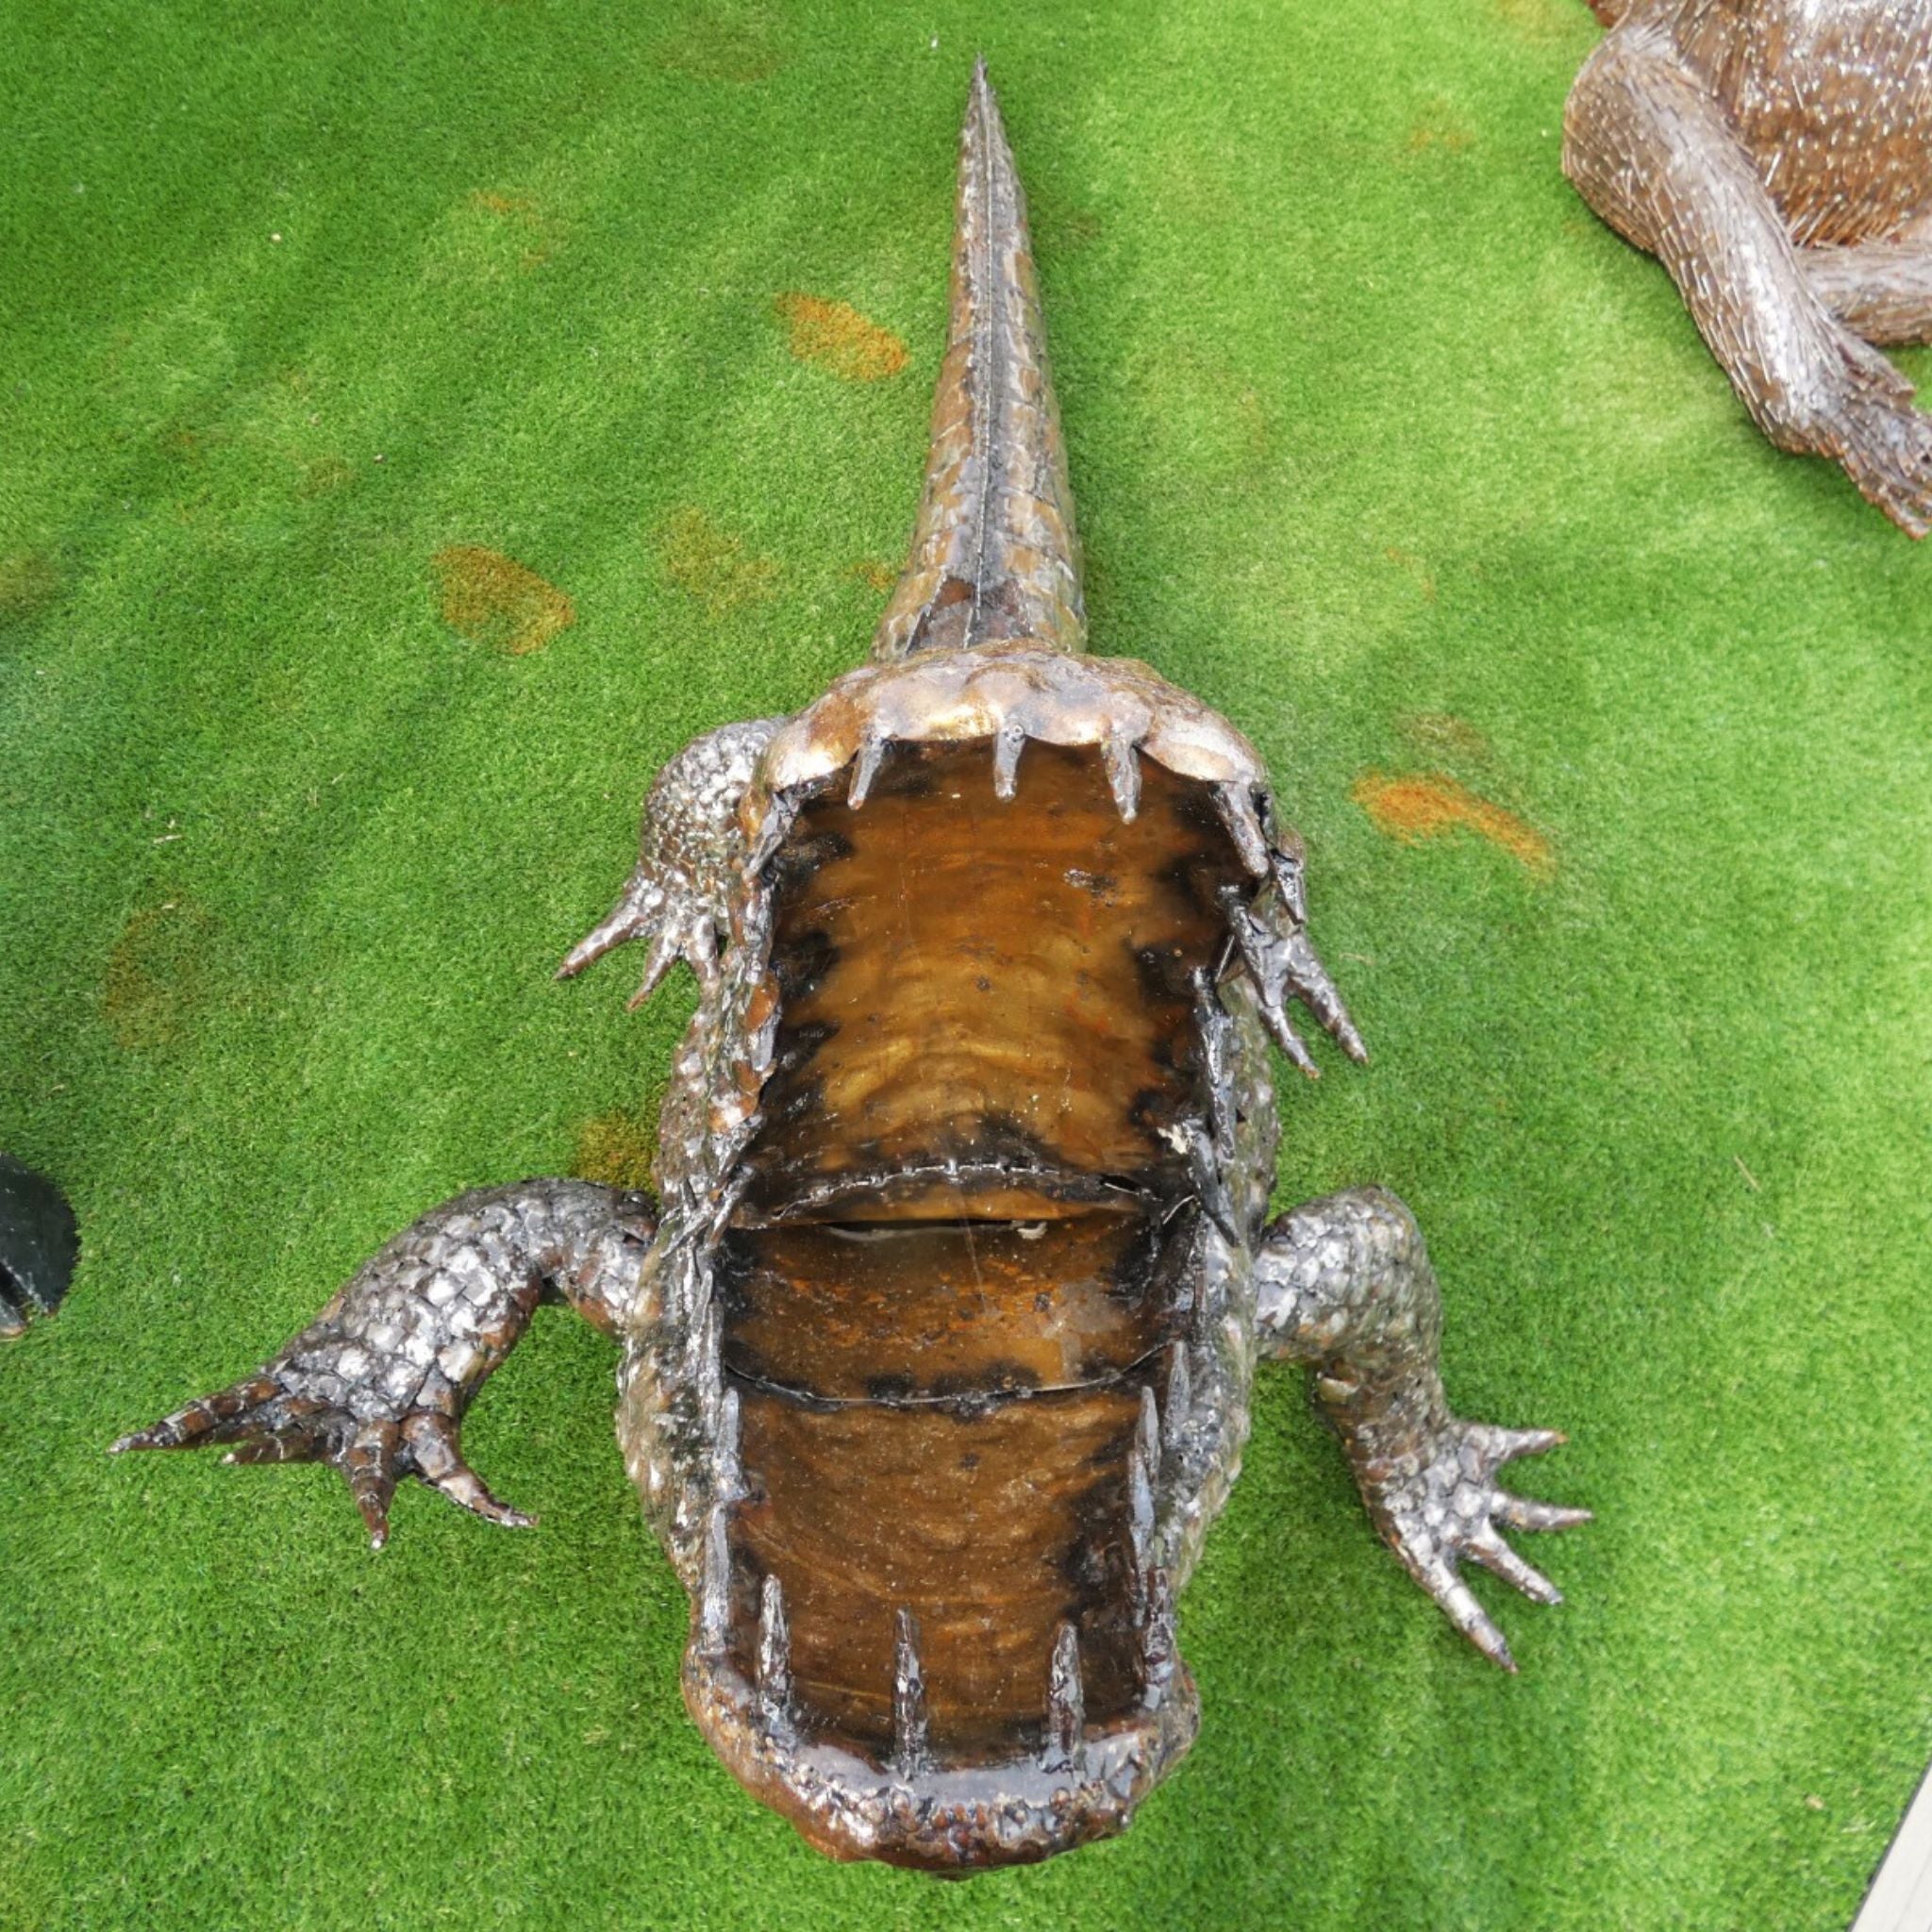 Standing Natural Crocodile - Pangea Sculptures